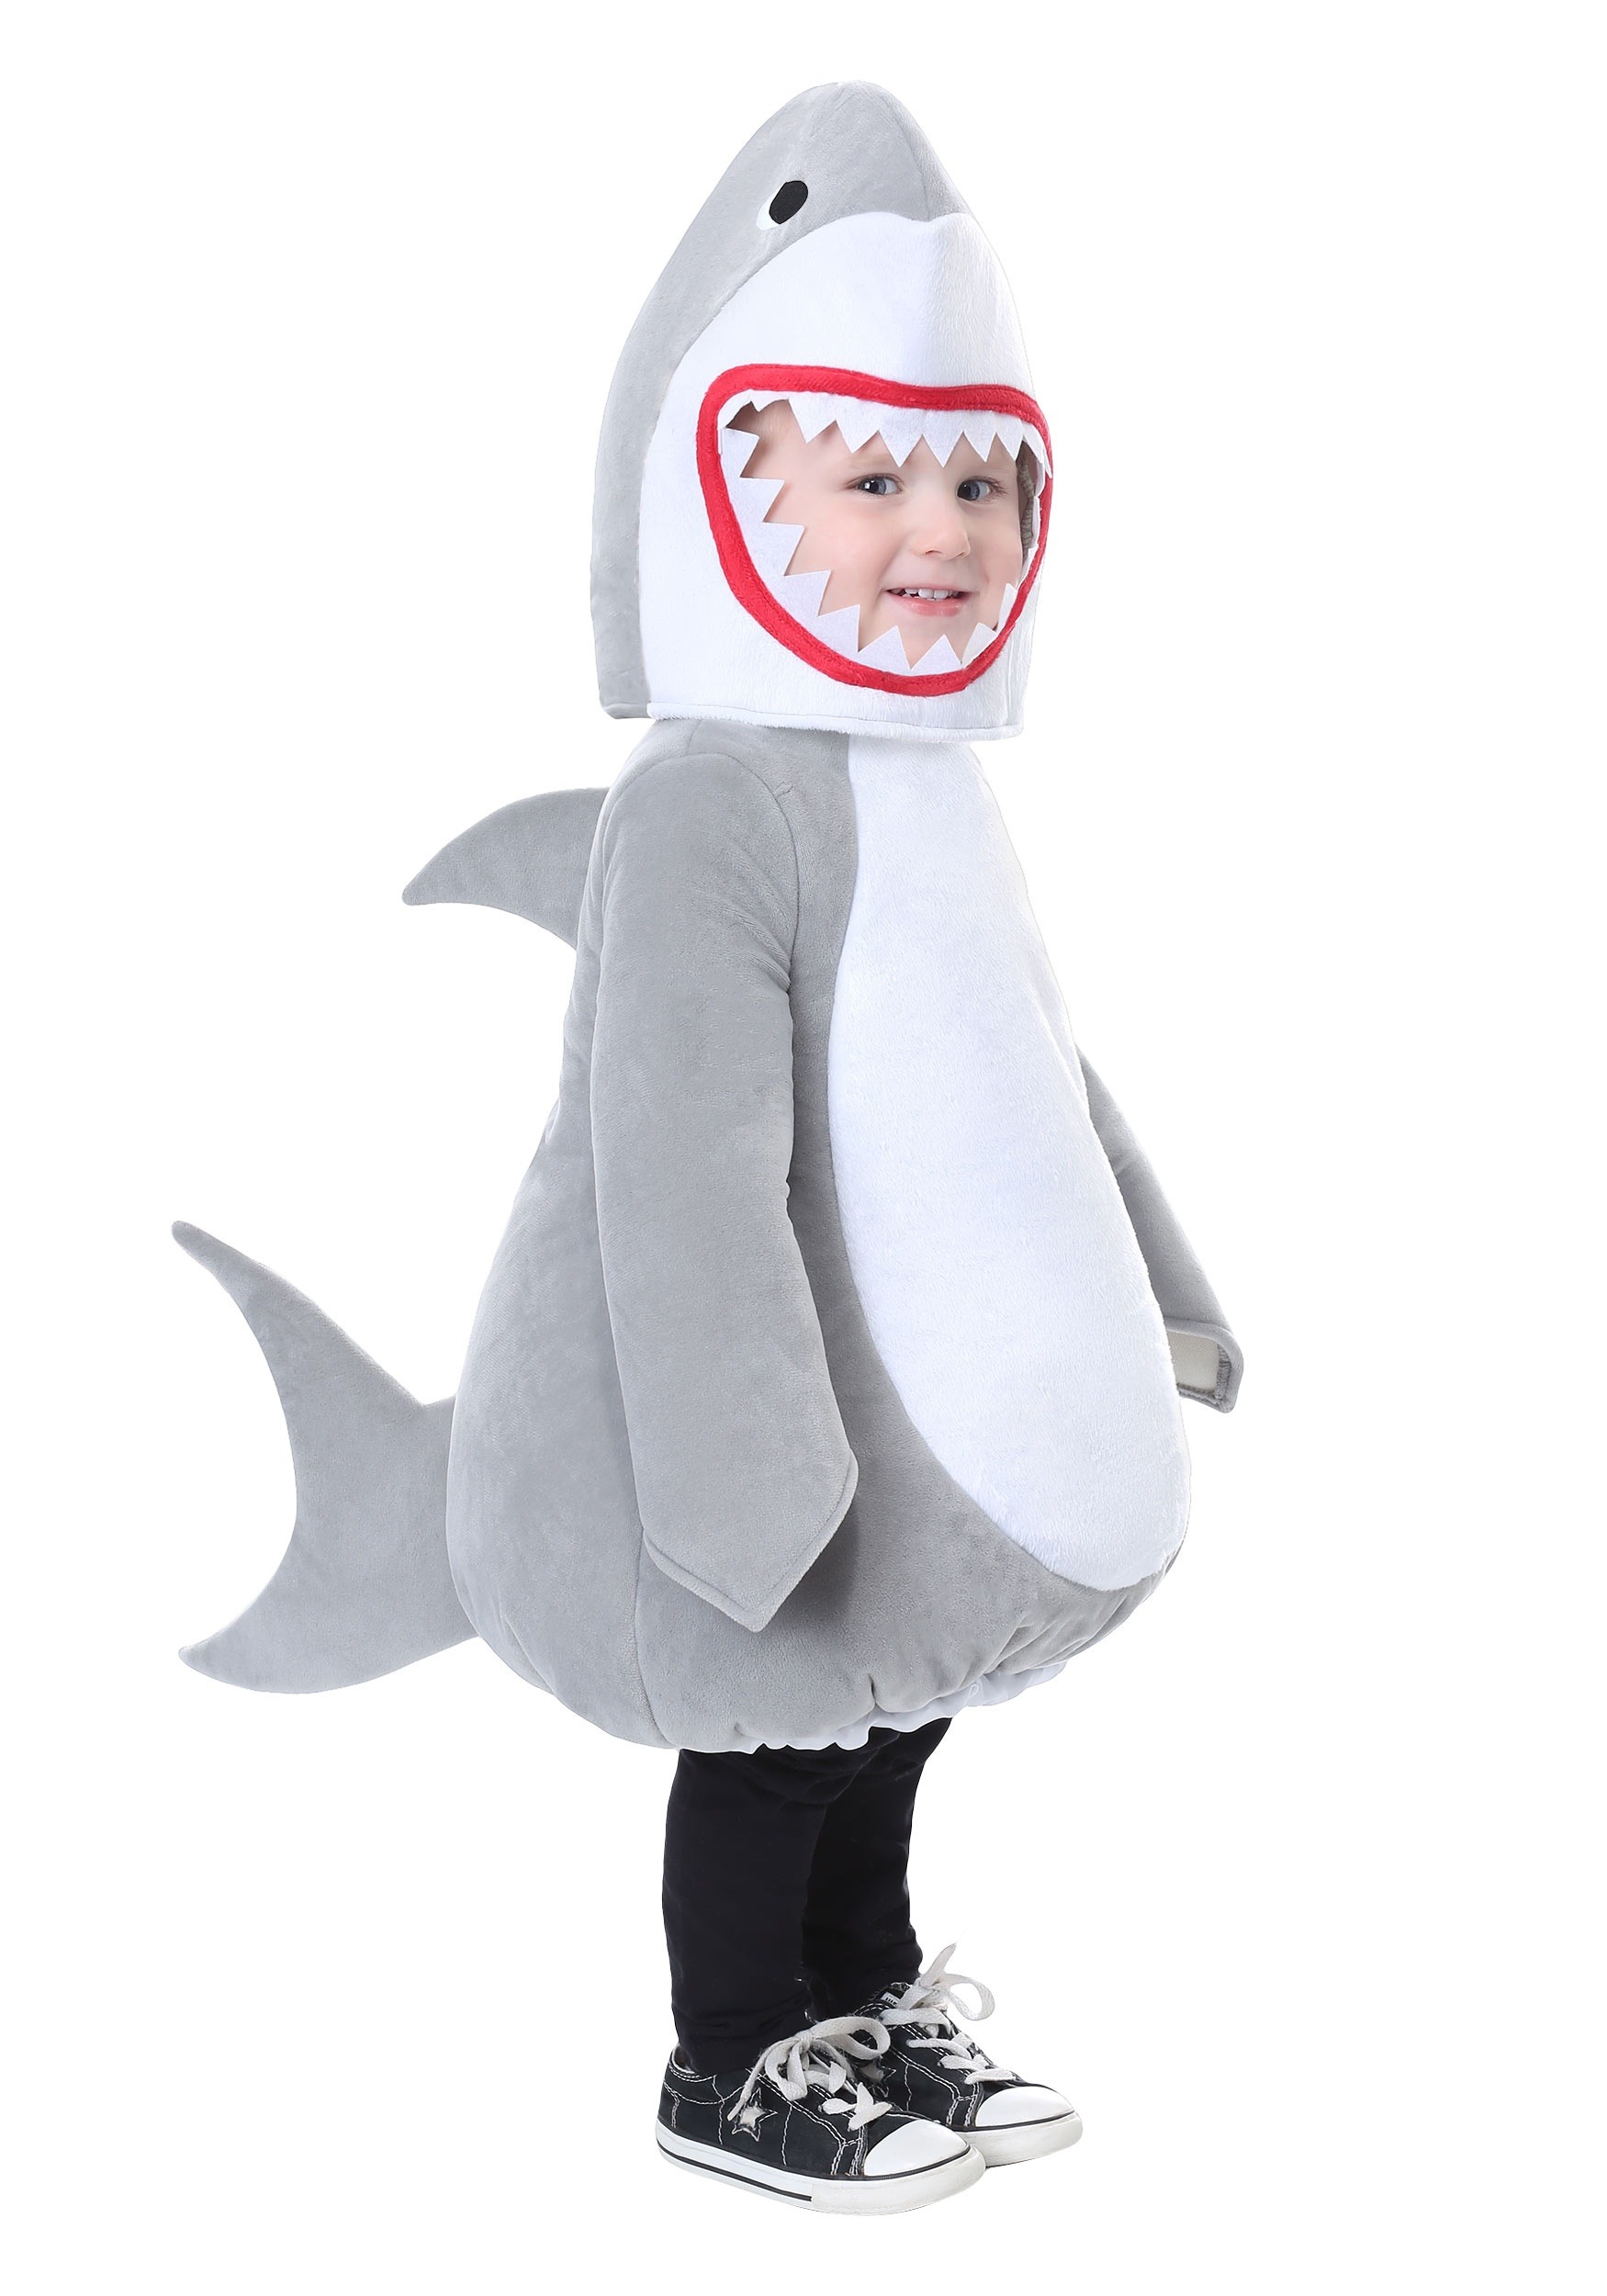 Bubble Shark Infant/Toddler Costume